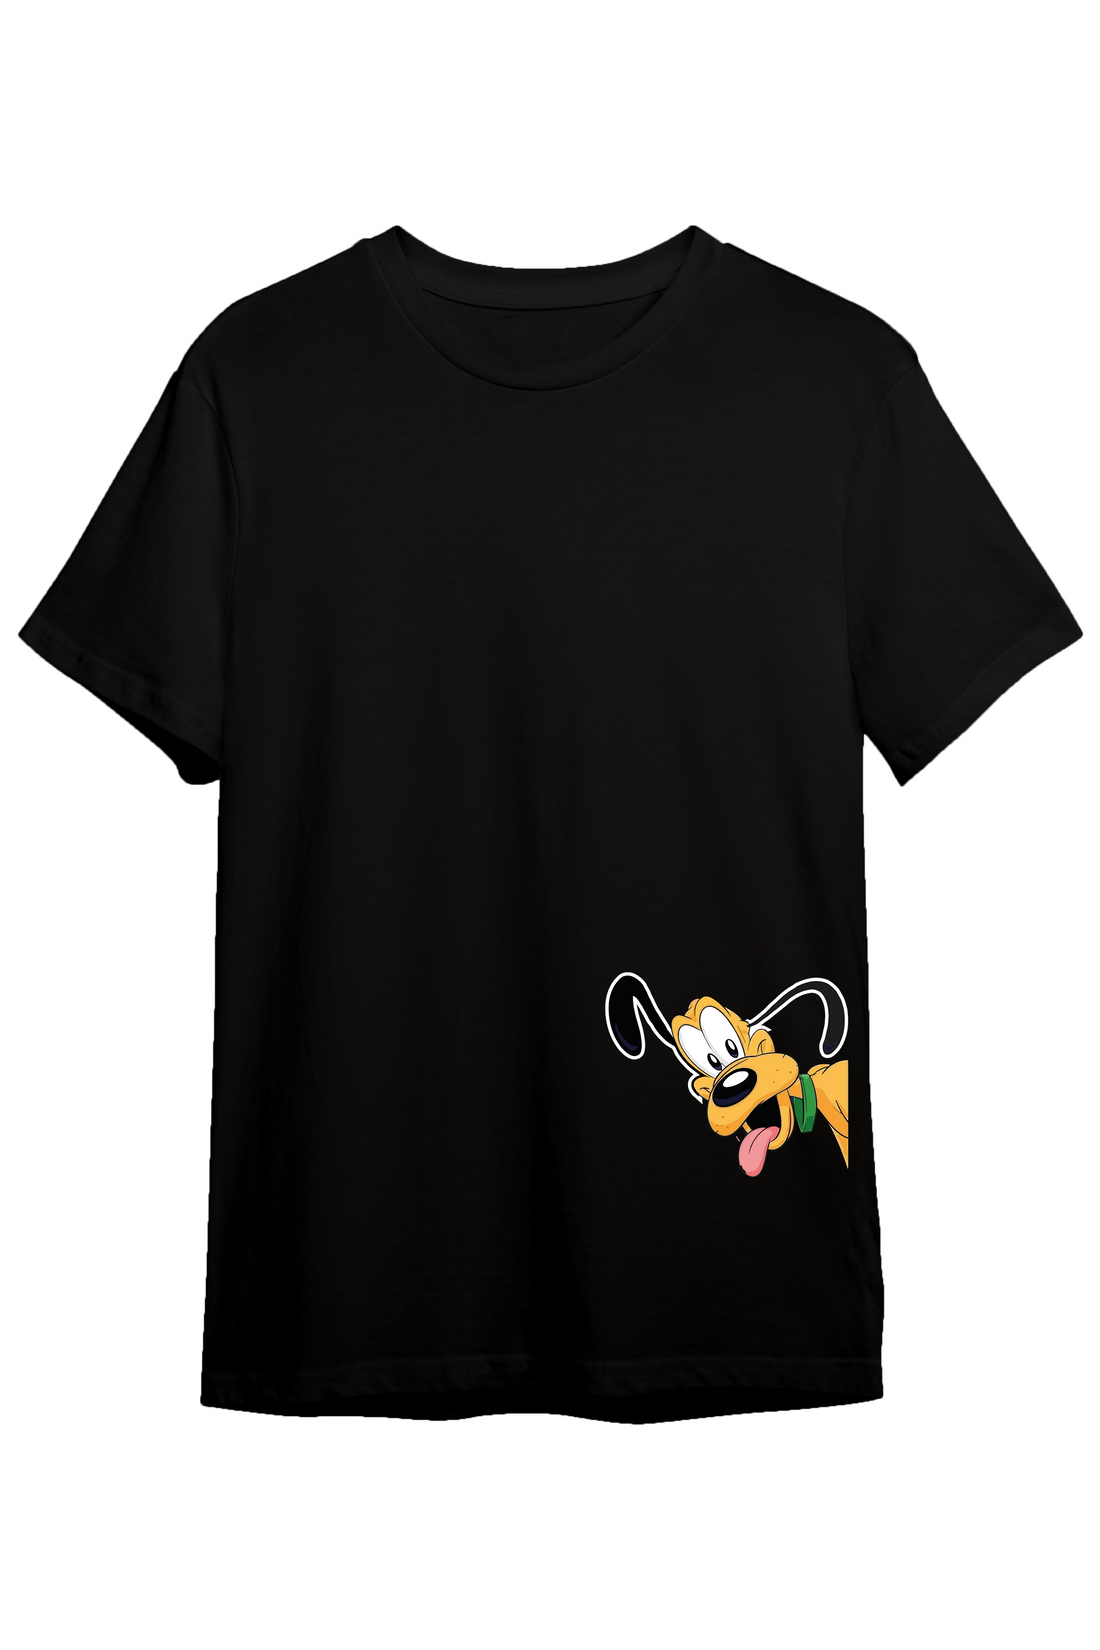 Pluto - Regular Tshirt